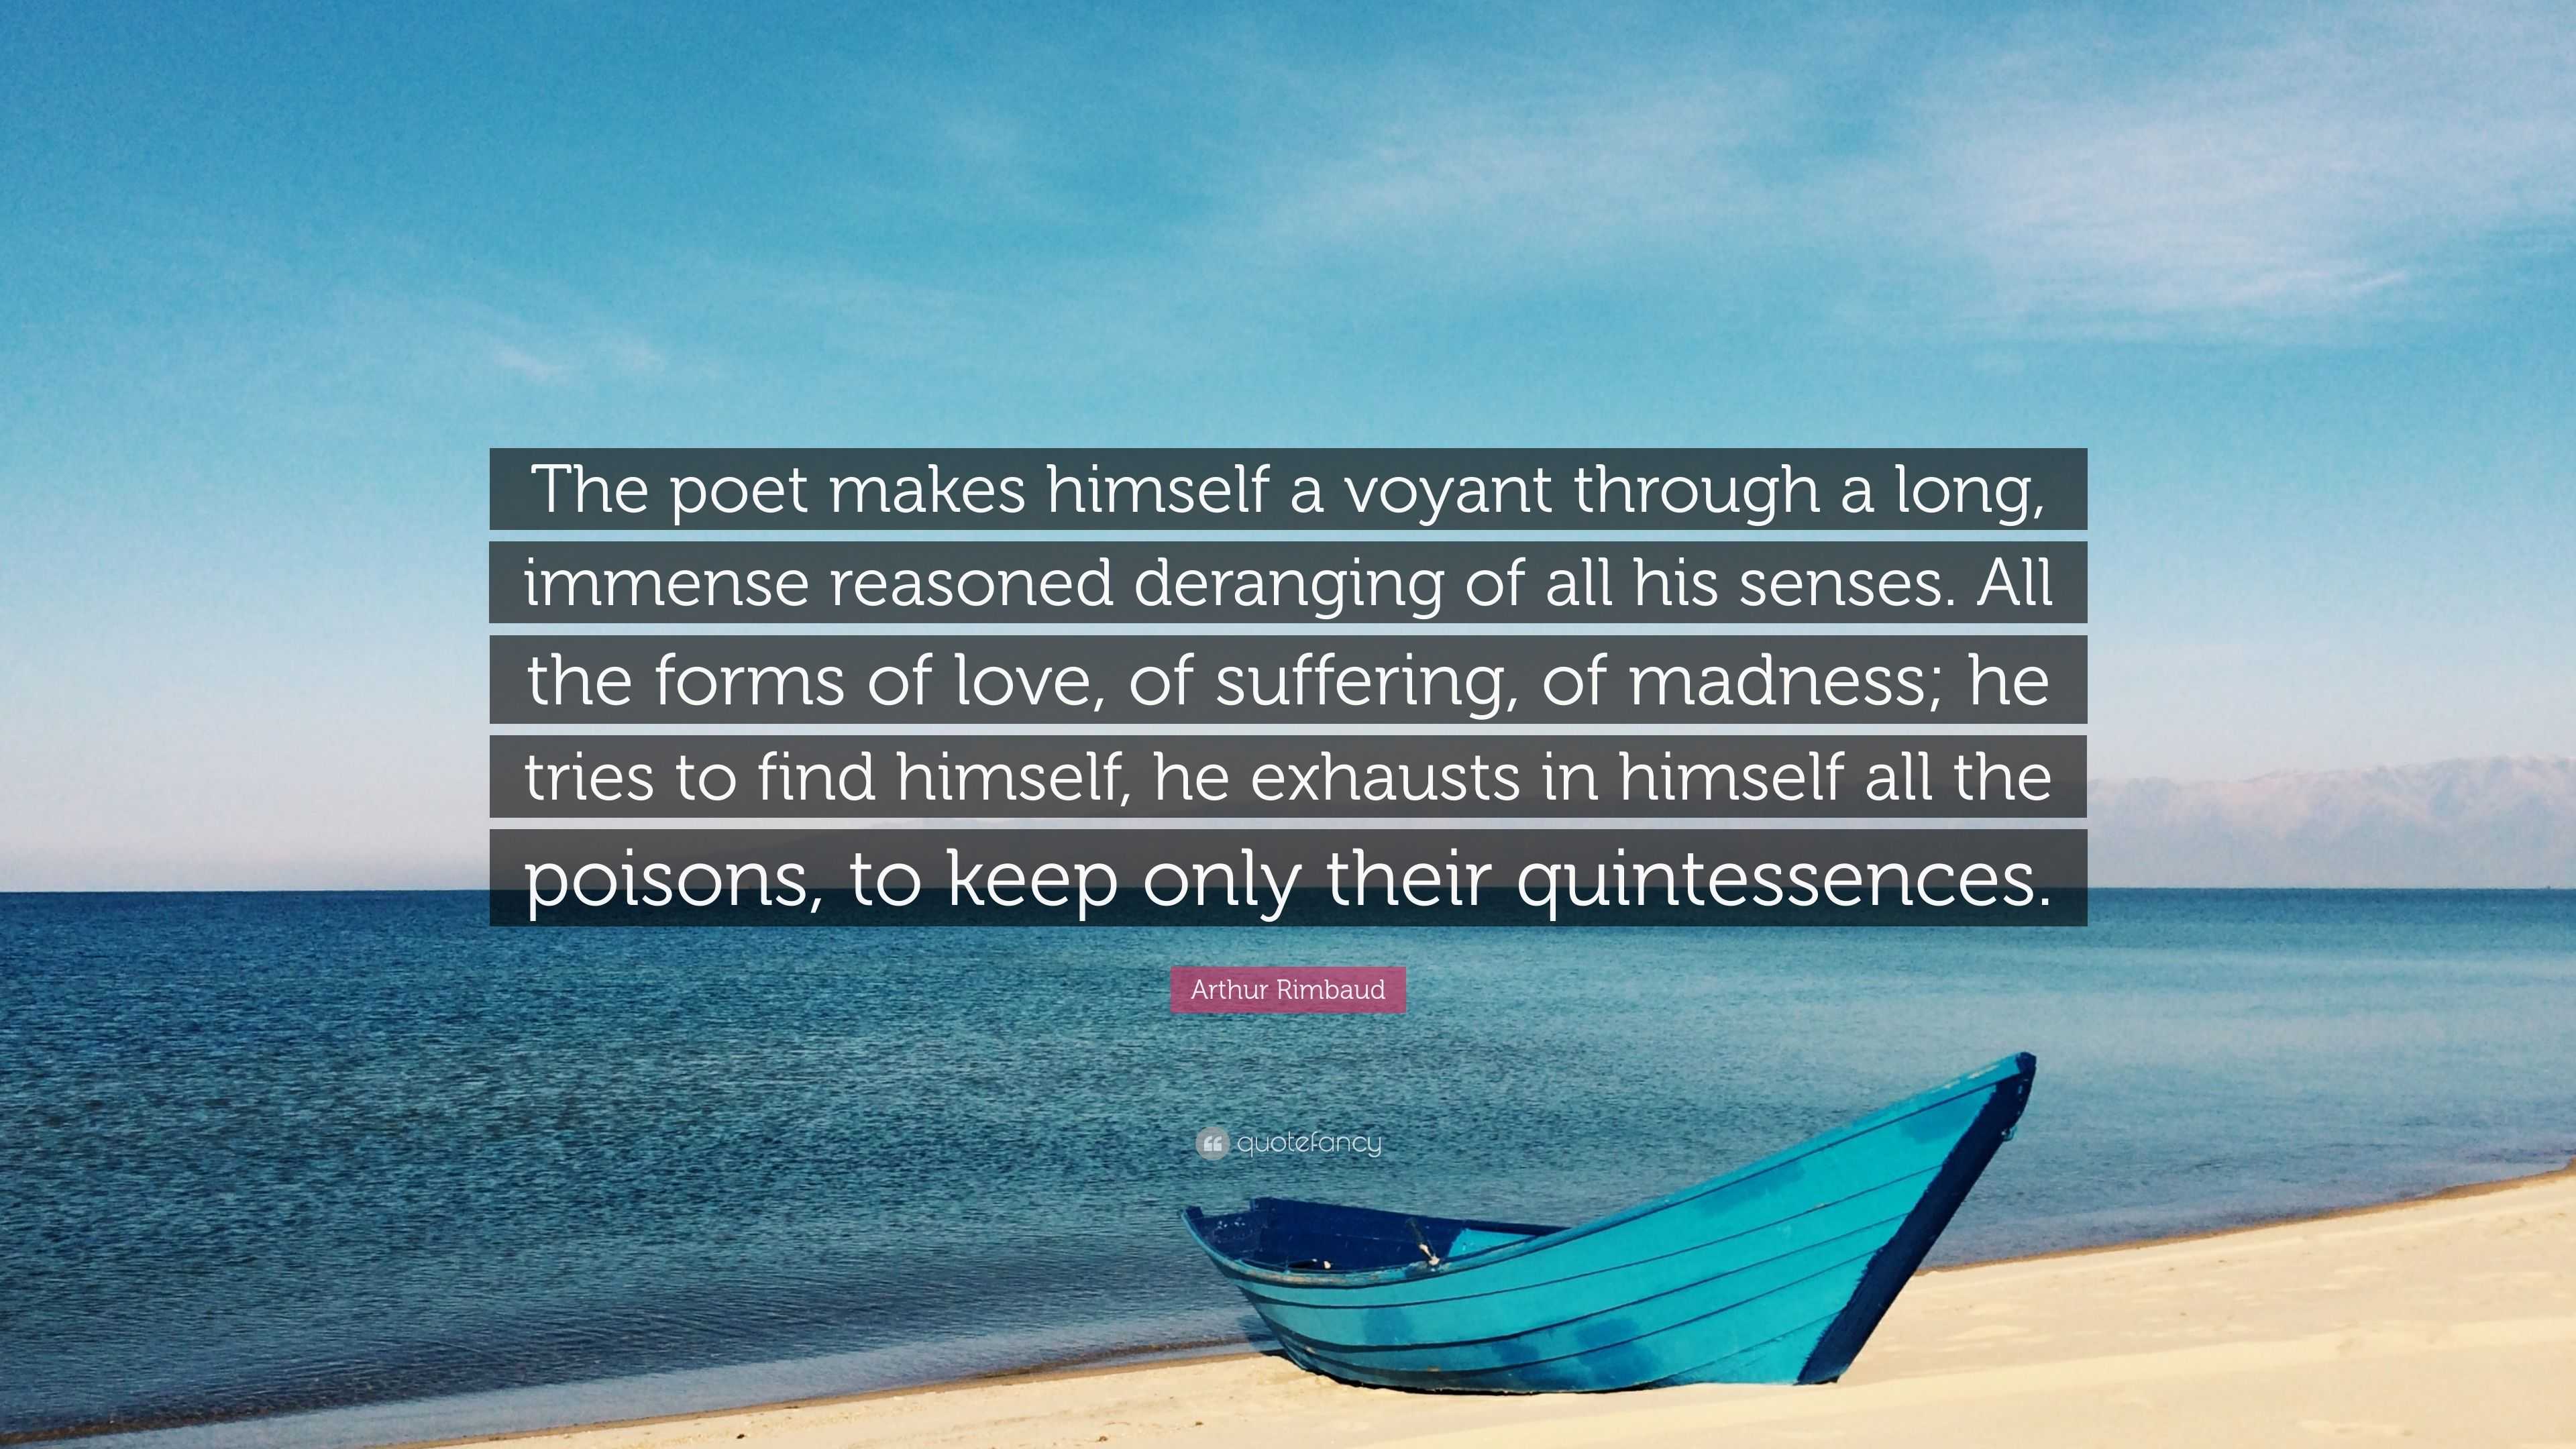 Arthur Rimbaud Quote: “The poet makes himself a voyant through a long ...